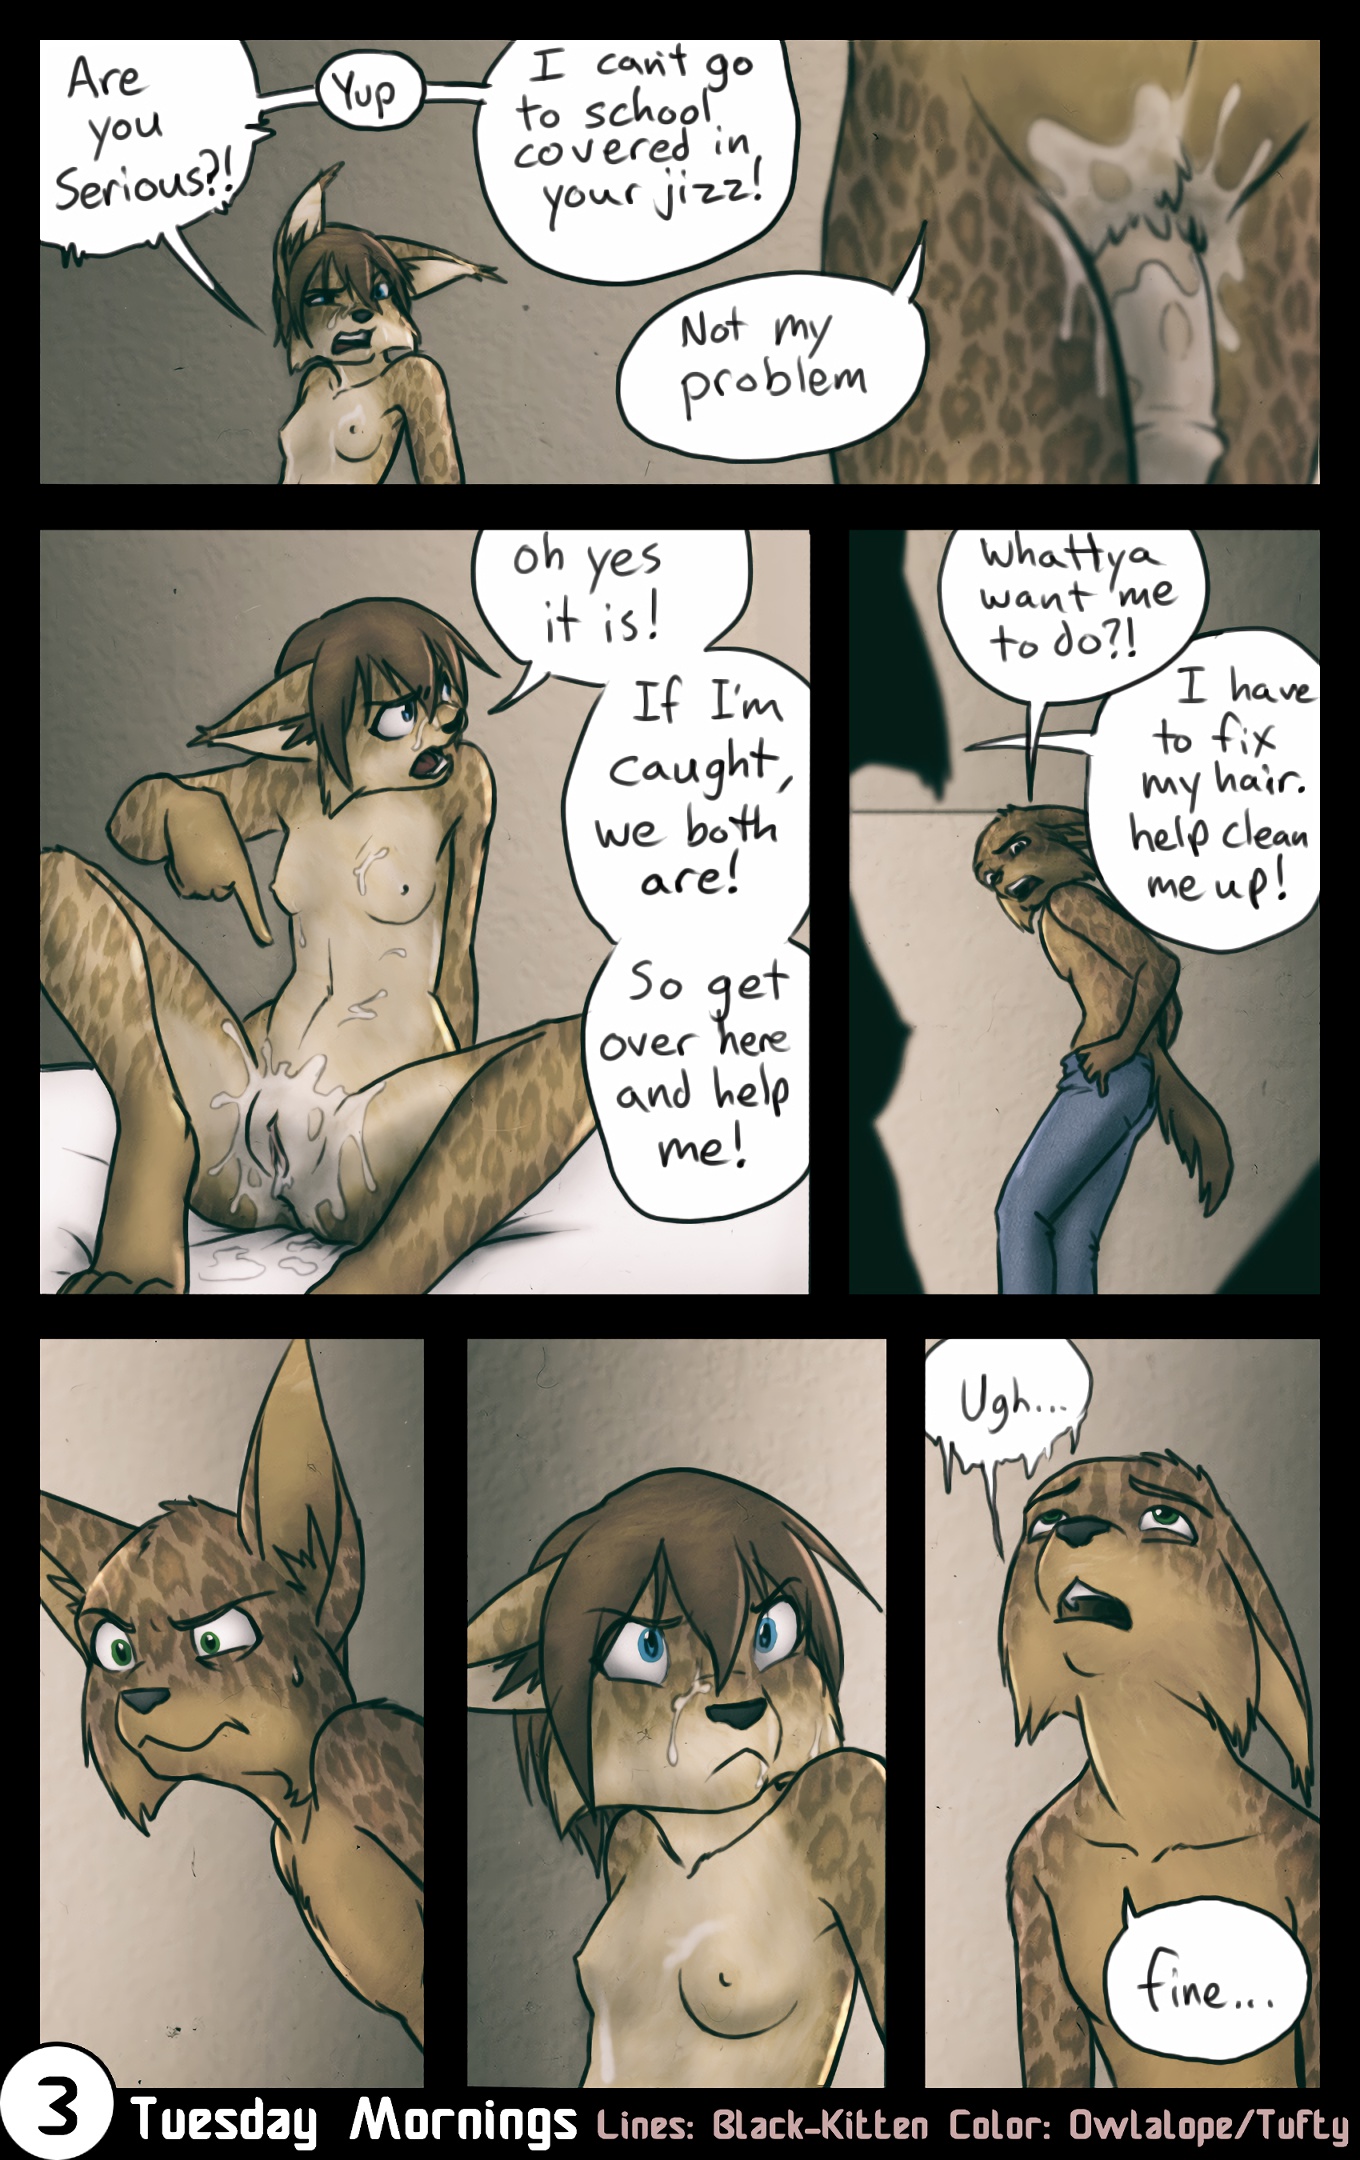 Furry porn comic tuesday mornings